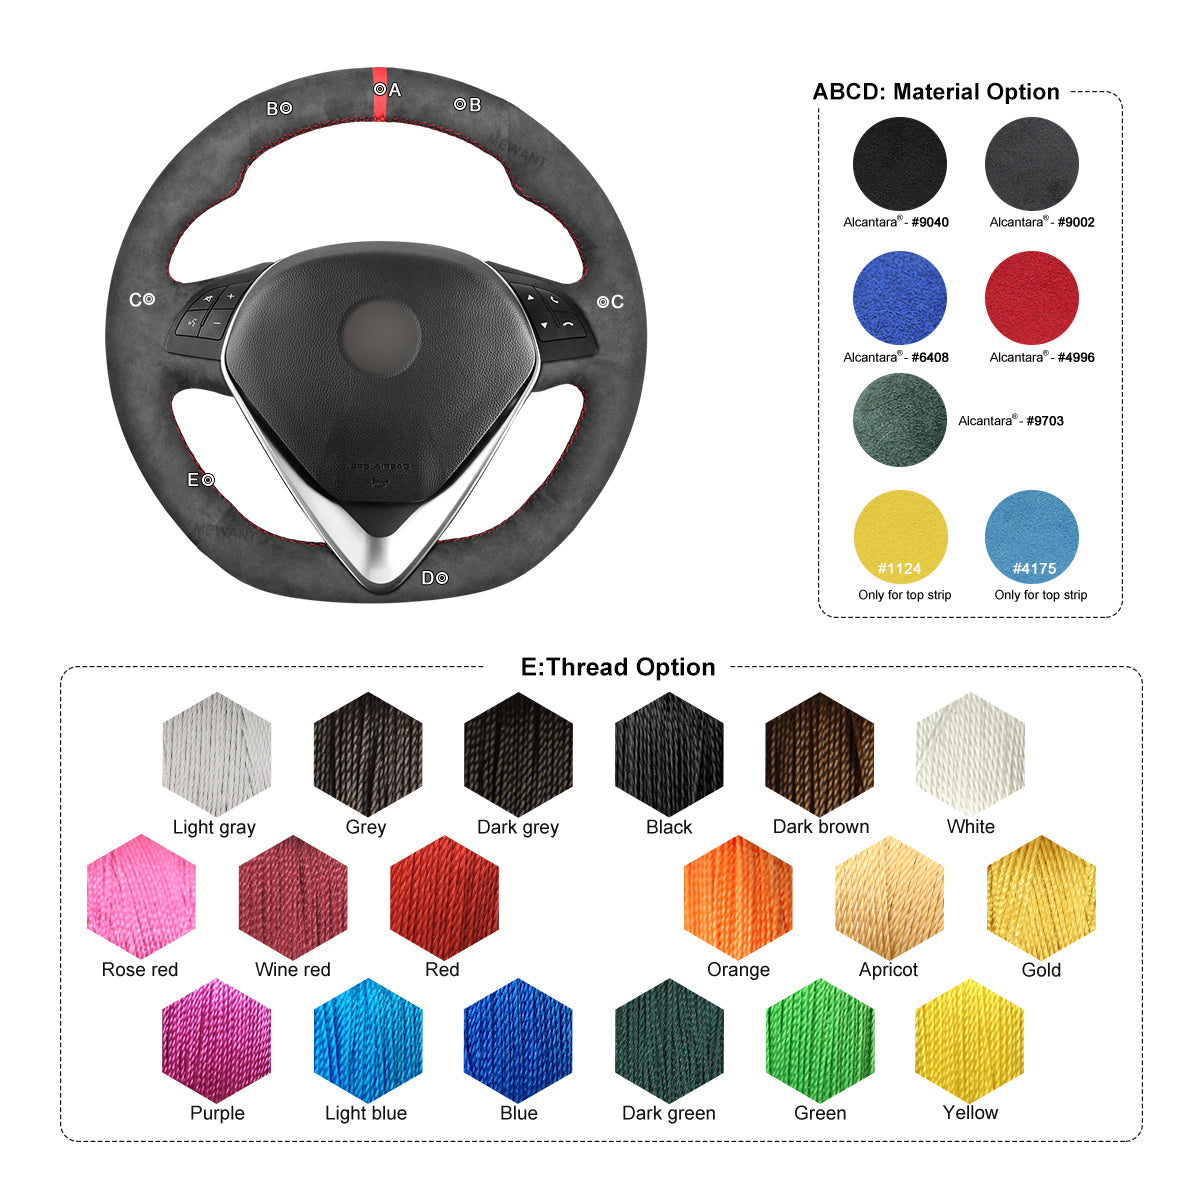 MEWANT Hand Stitch Dark Gray Alcantara Car Steering Wheel Cover for Alfa Romeo Giulietta 2014-2021